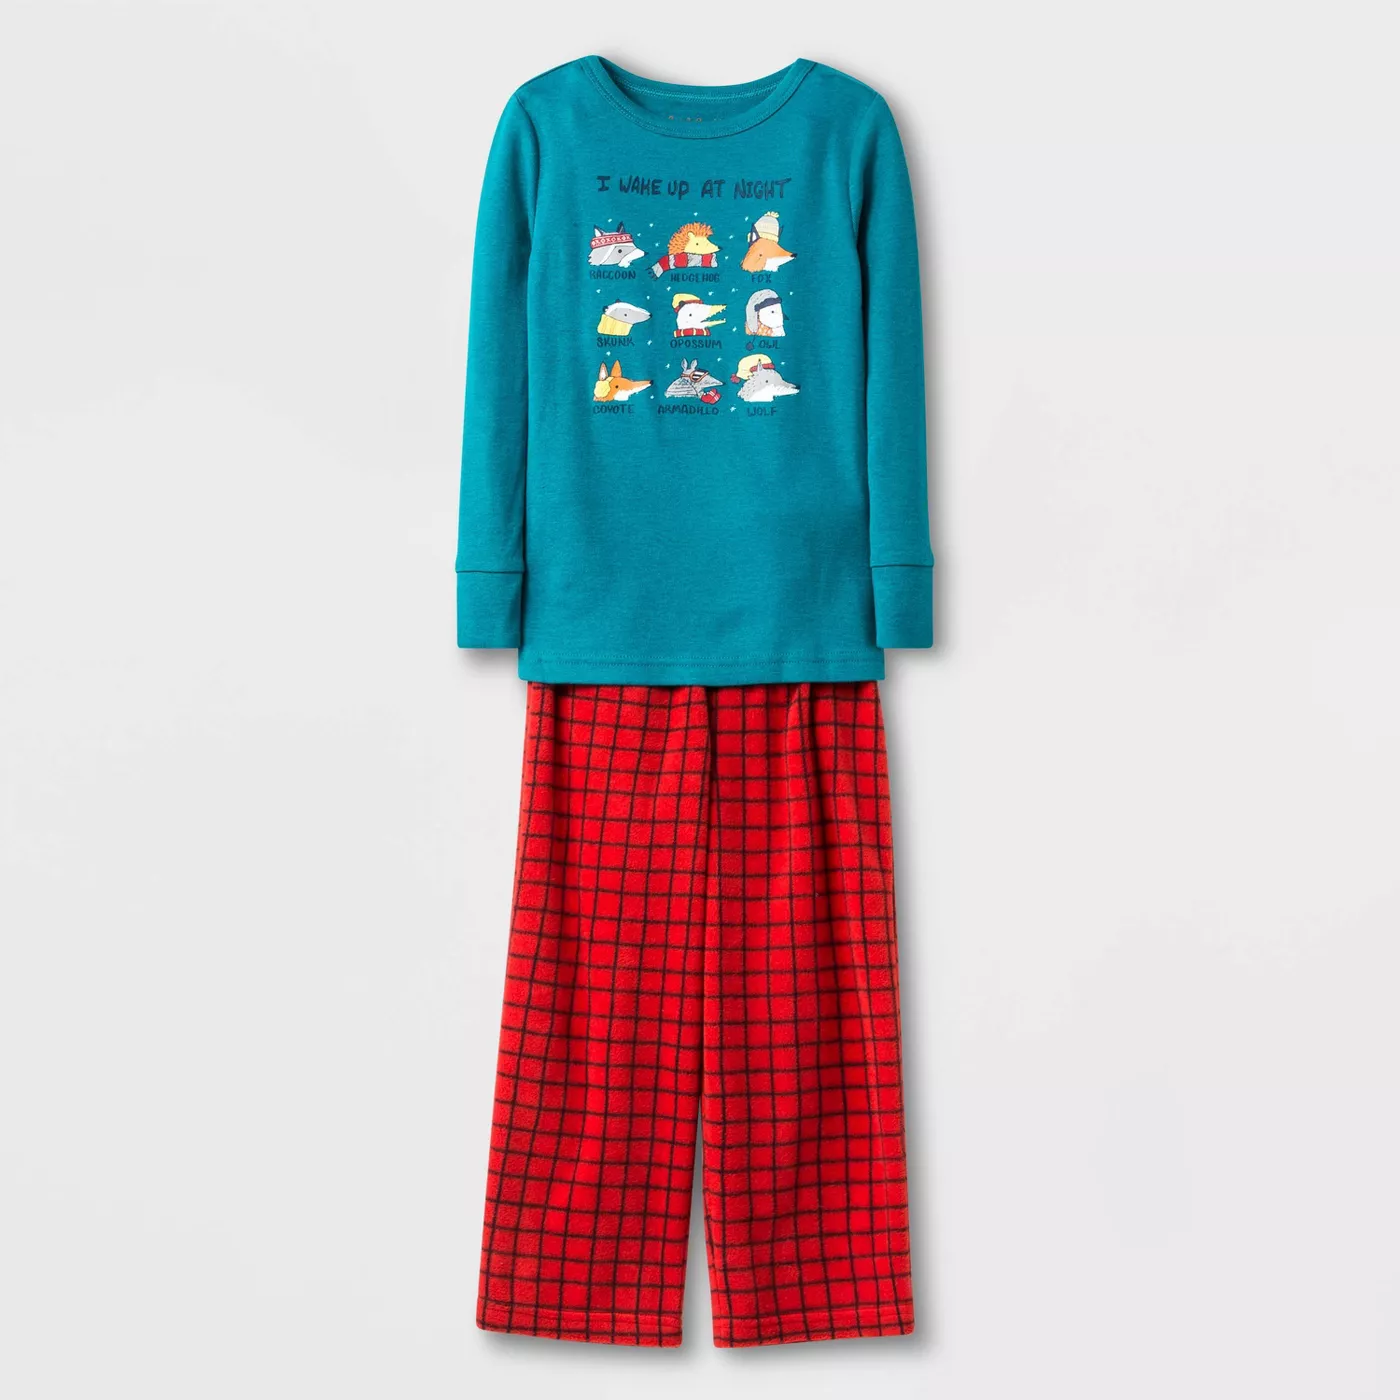 Toddler Boys' Chillin' Pajama Set - Cat & Jack™ Teal/Red - image 1 of 1